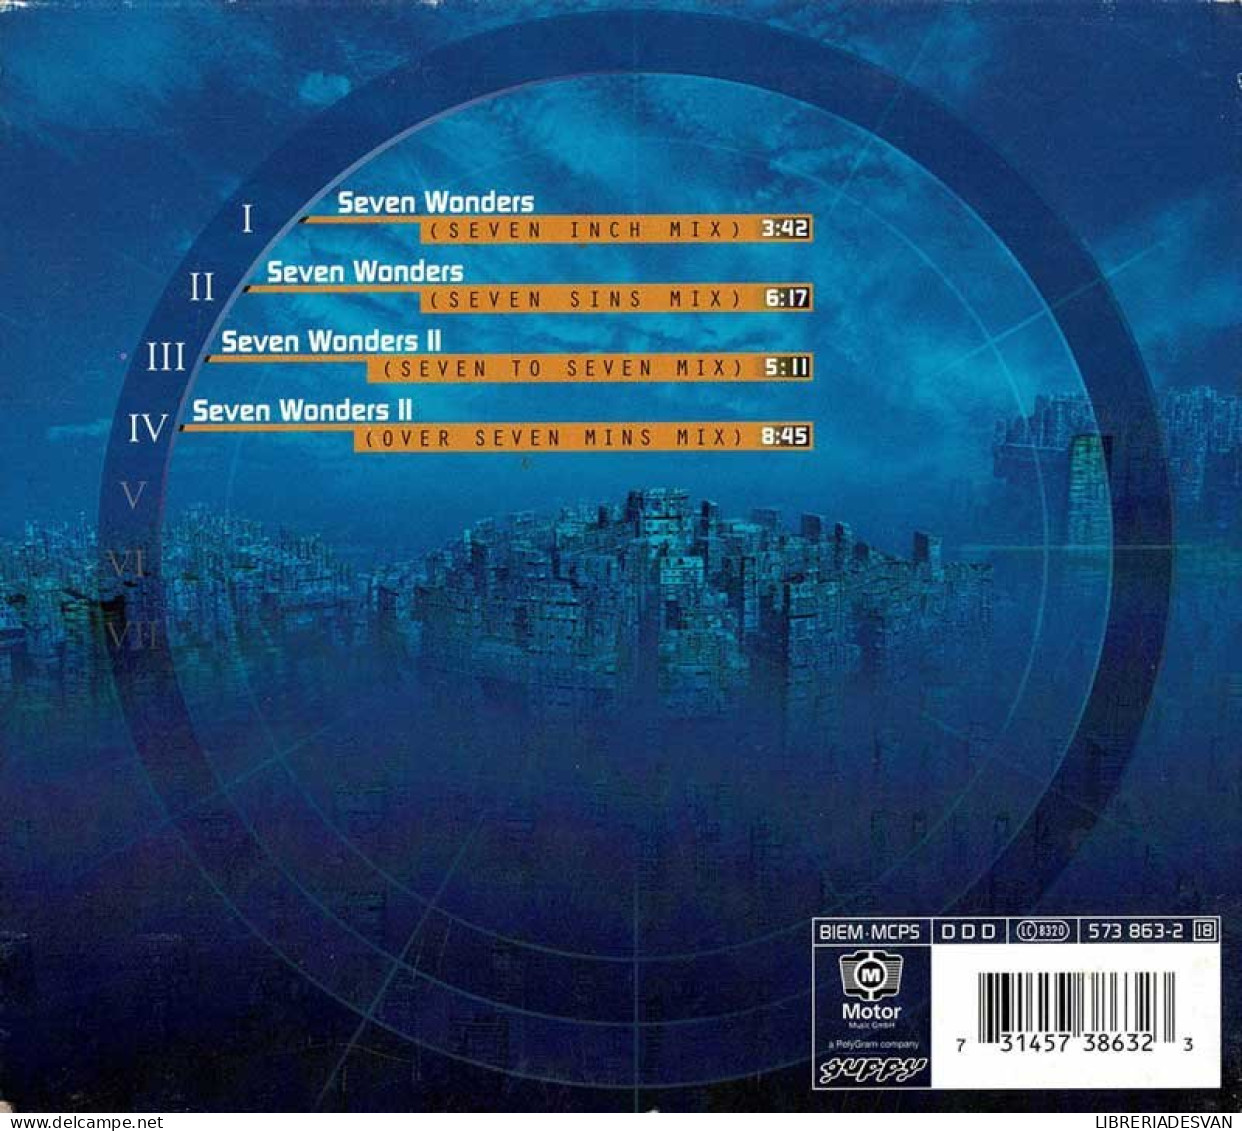 U96 - Seven Wonders. CD - Dance, Techno & House